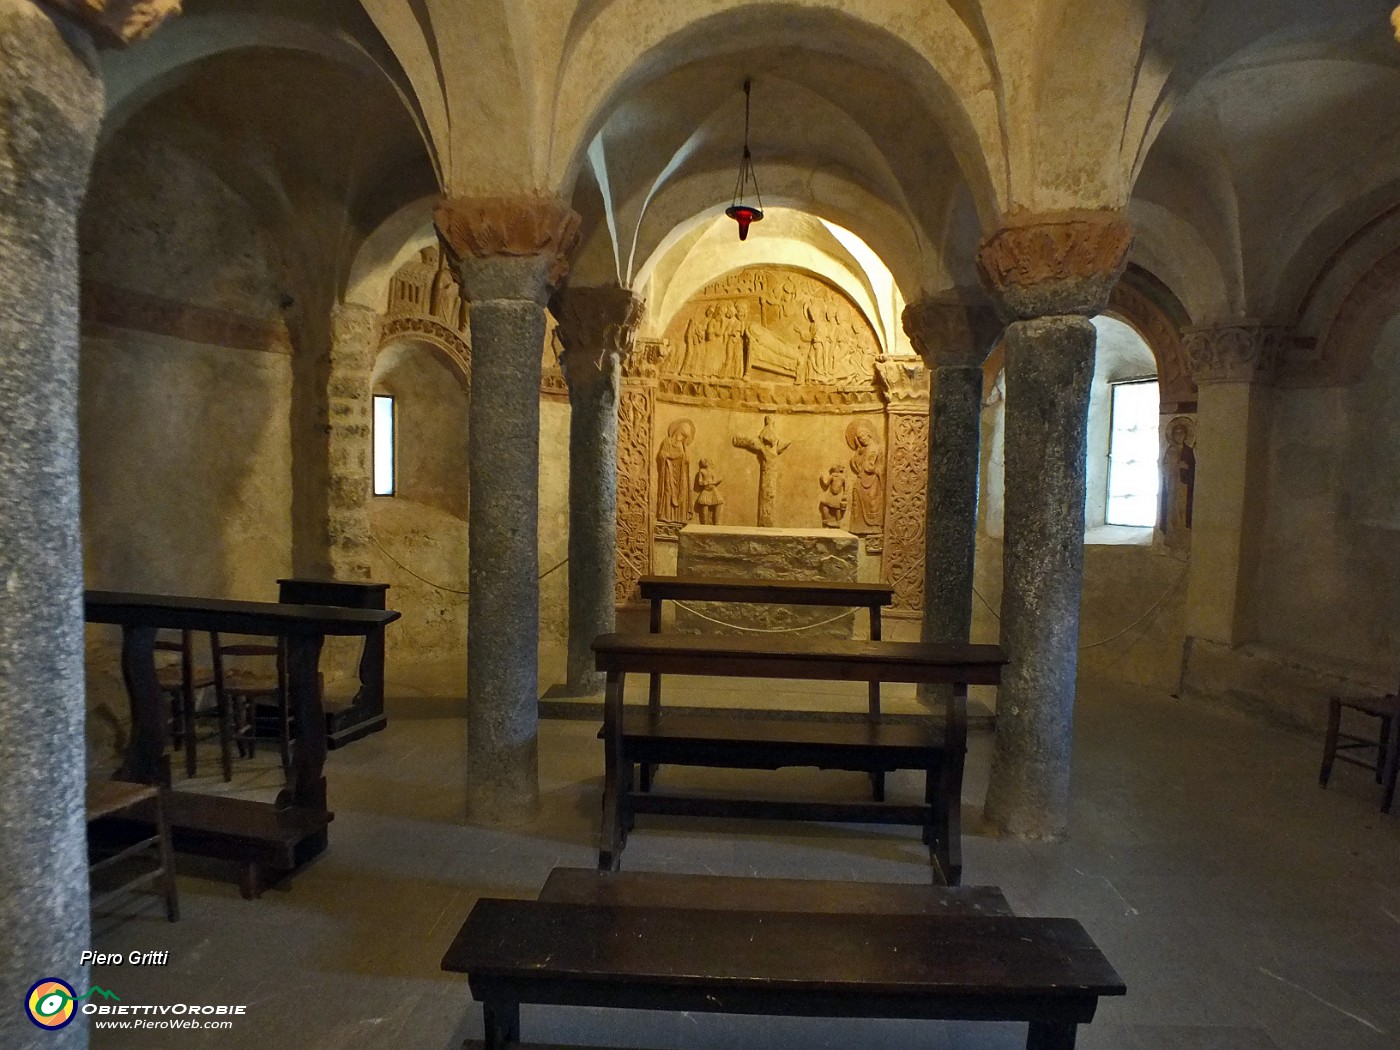 29 La cripta  sotterranea antichissima.JPG